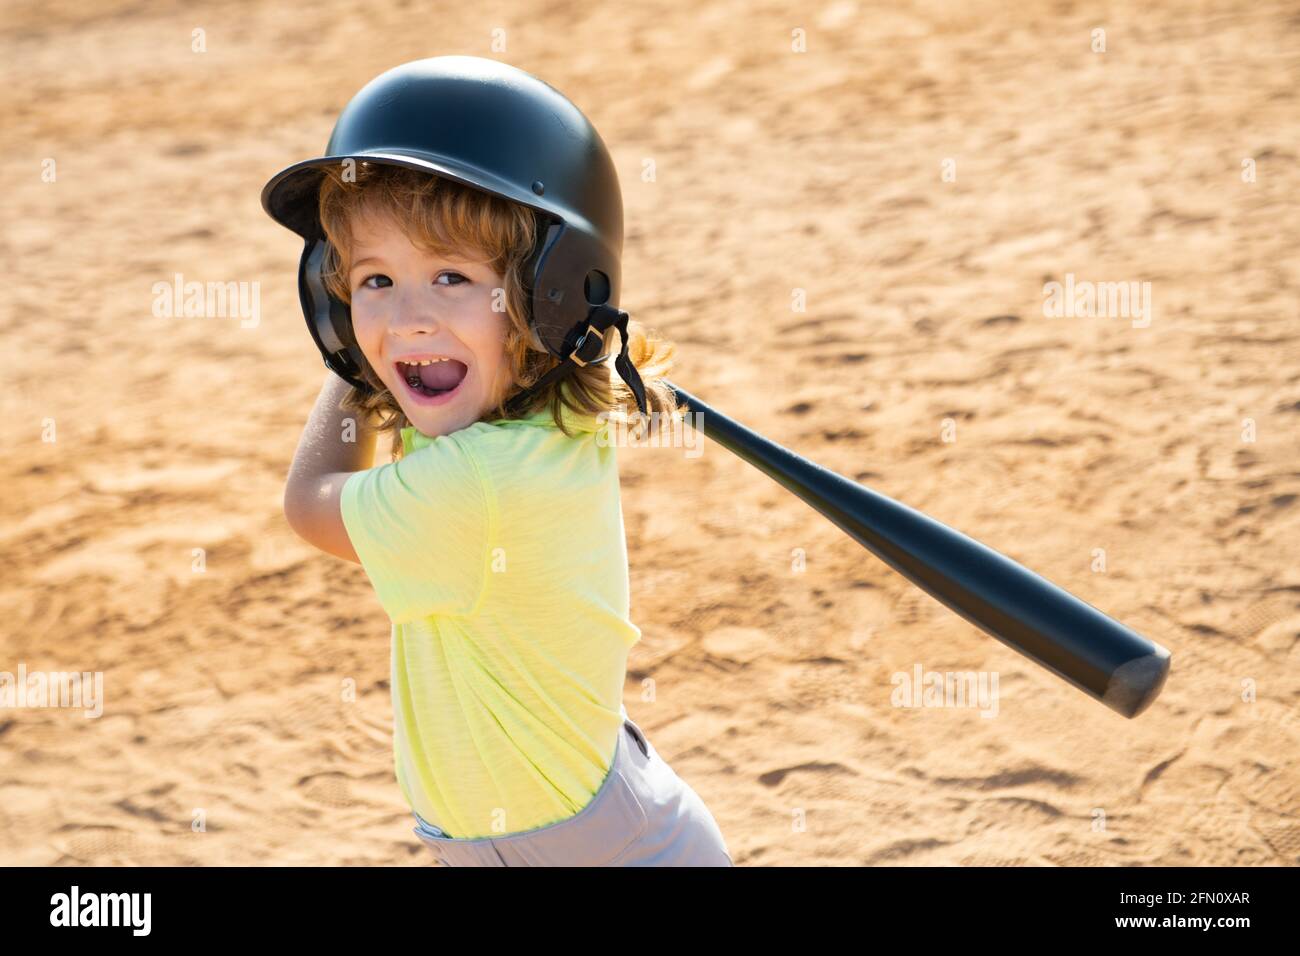 Excited child baseball player focused ready to bat. Kid holding a baseball  bat Stock Photo - Alamy